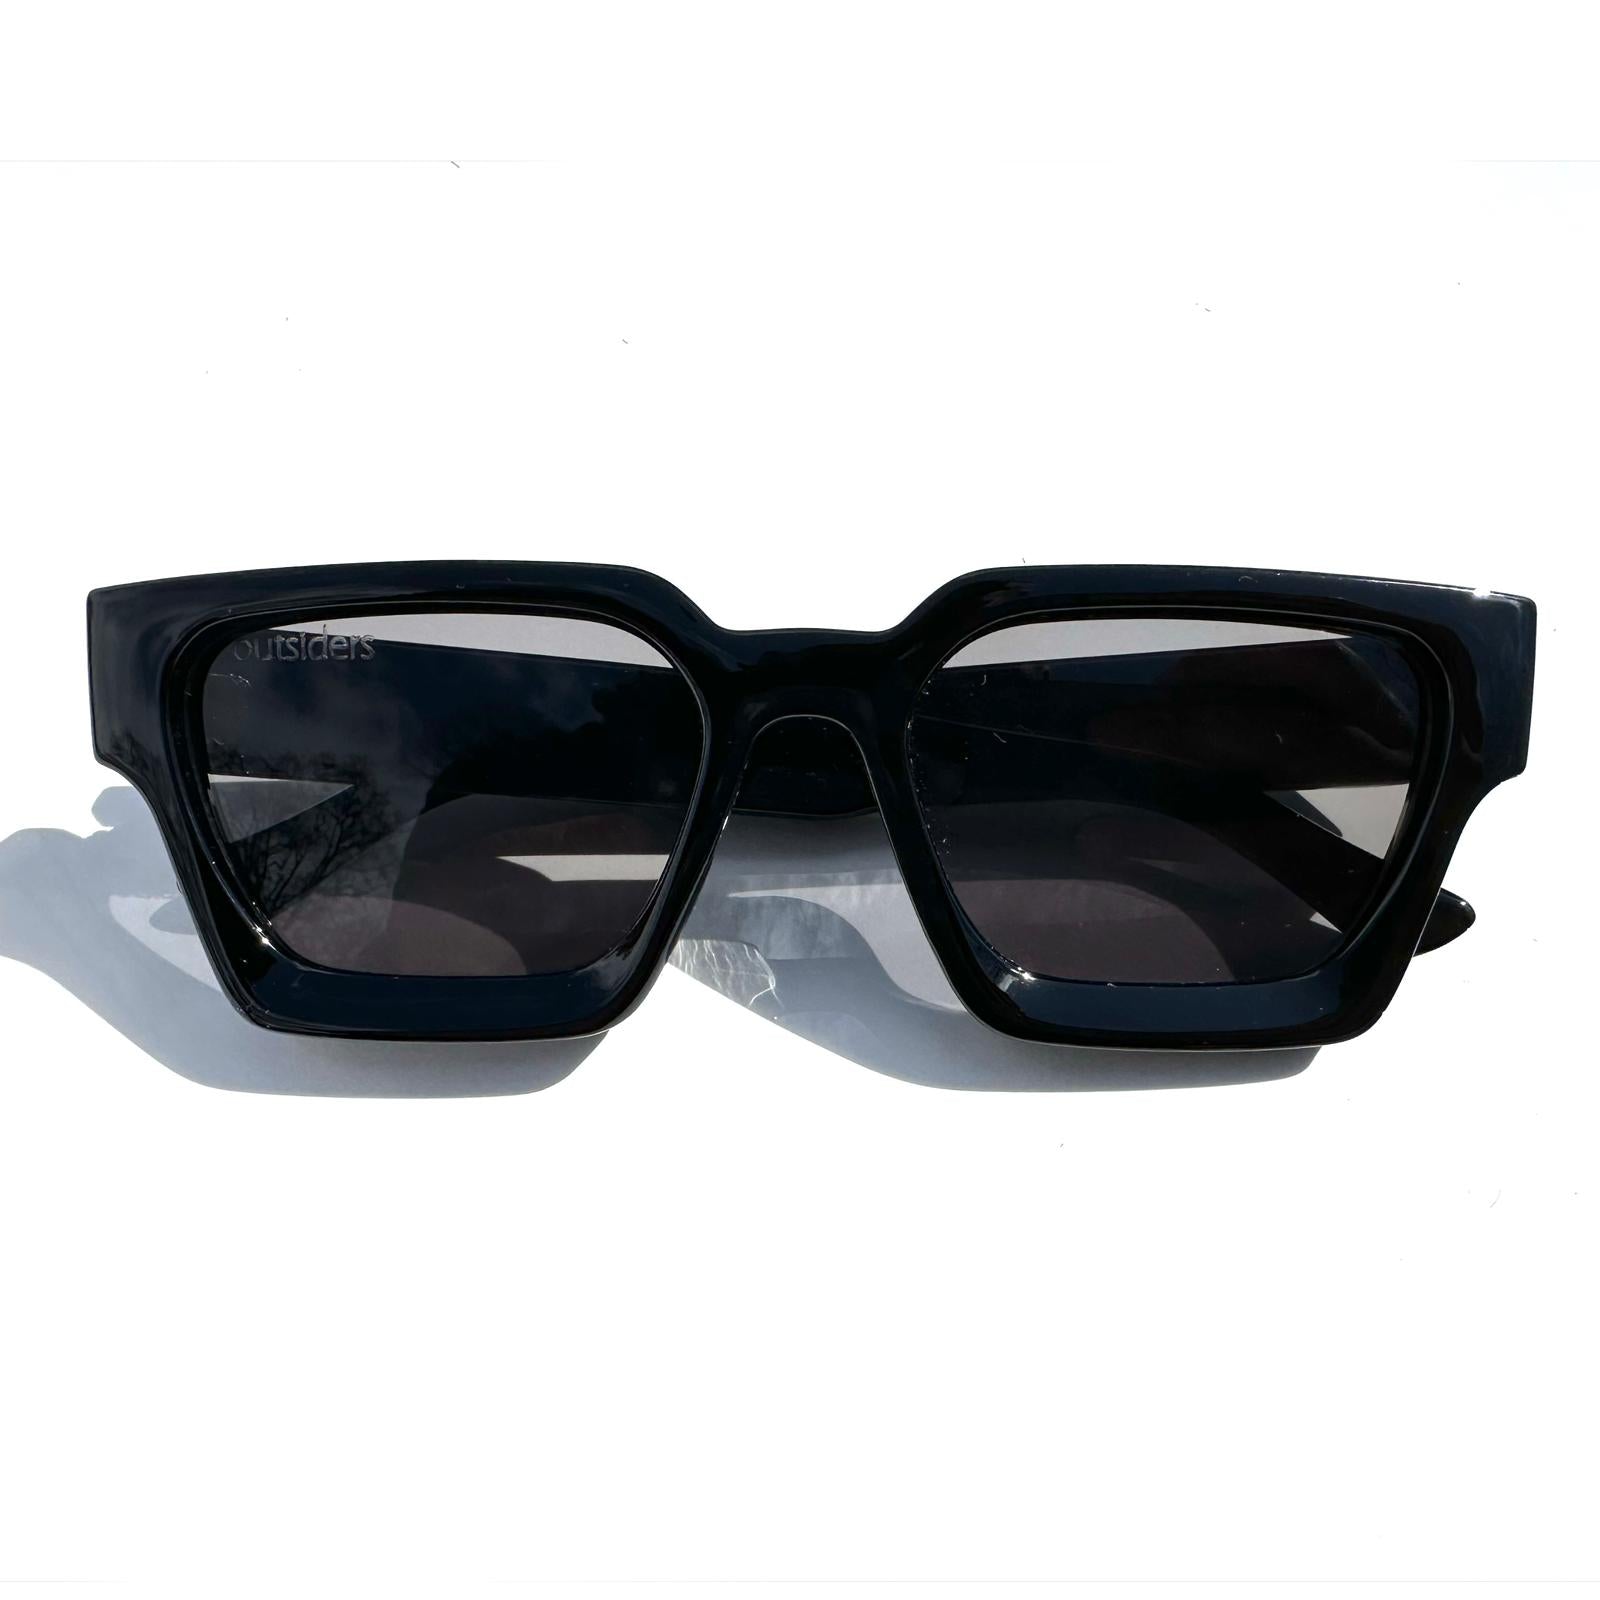 Outsiders - Waved Sunglasses - Black